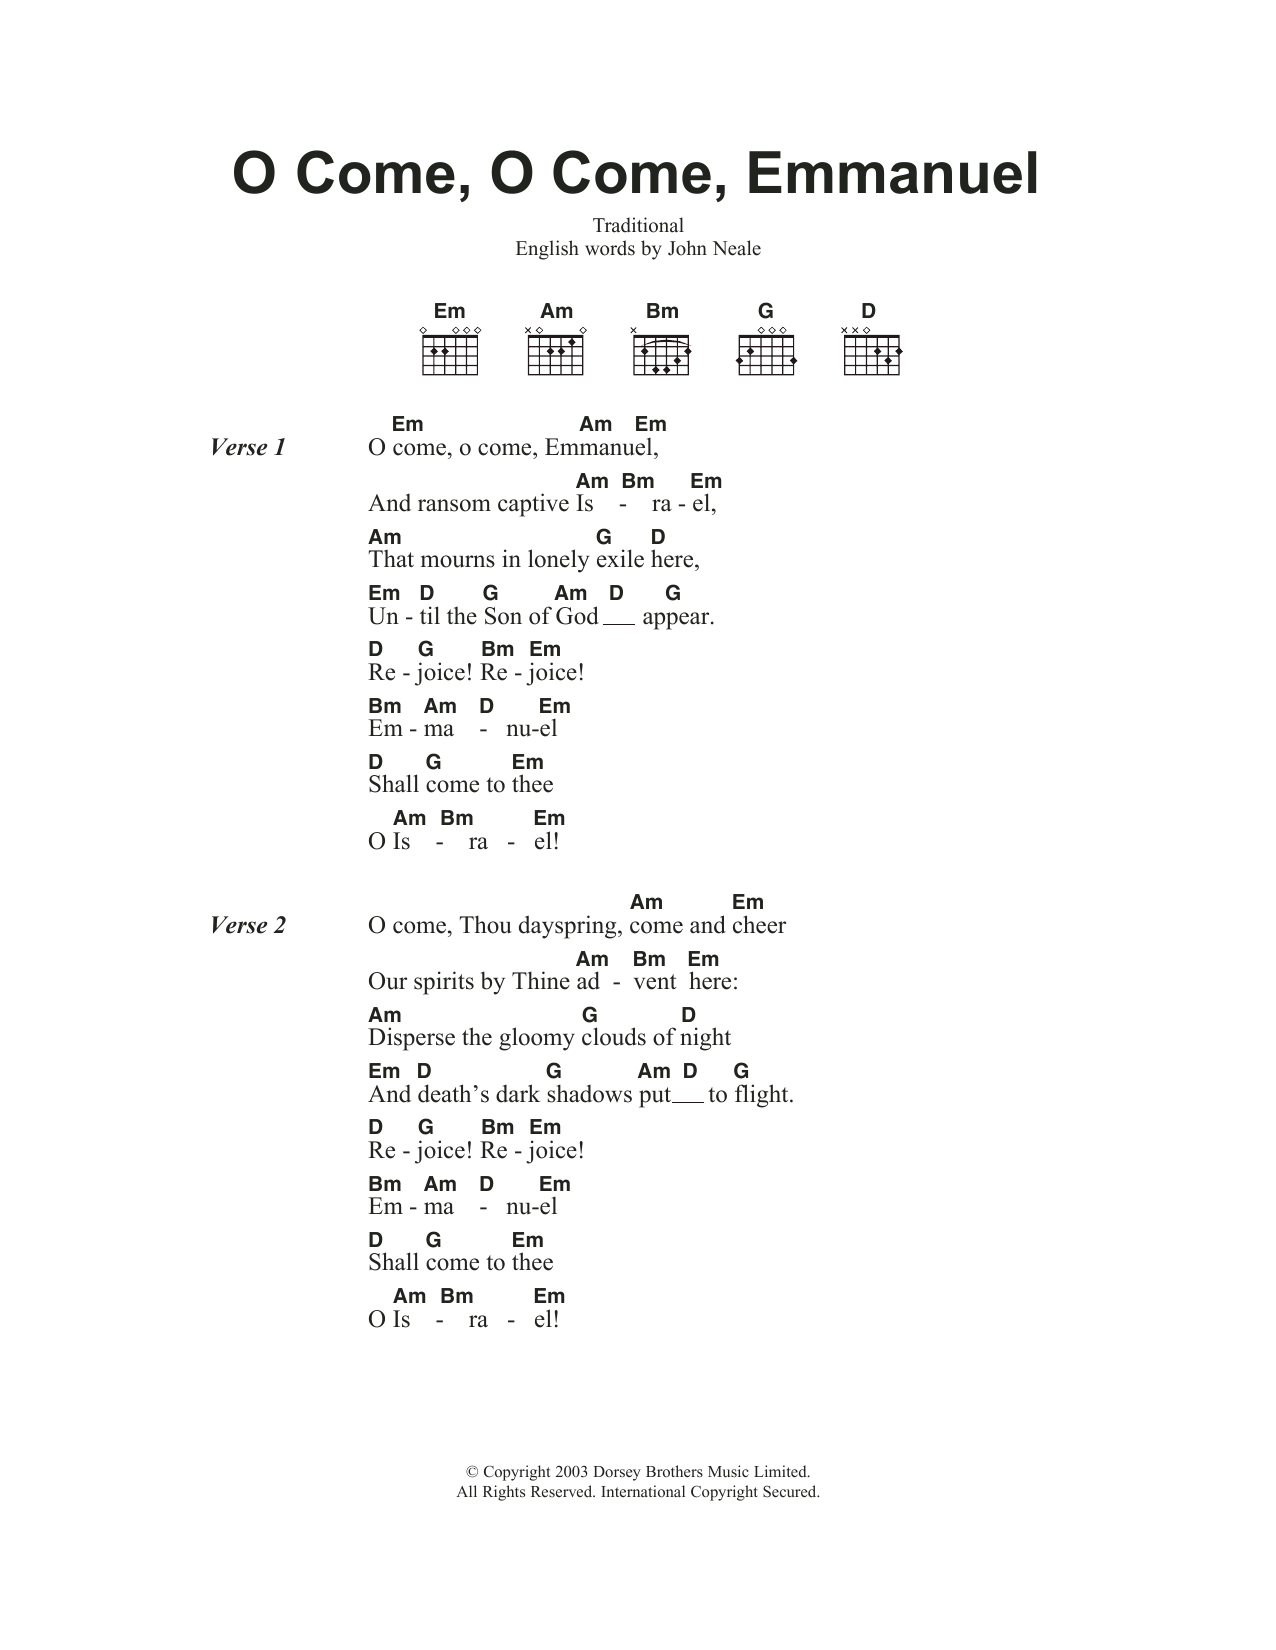 Traditional Carol O Come, O Come, Emmanuel Sheet Music Notes & Chords for Guitar Chords/Lyrics - Download or Print PDF